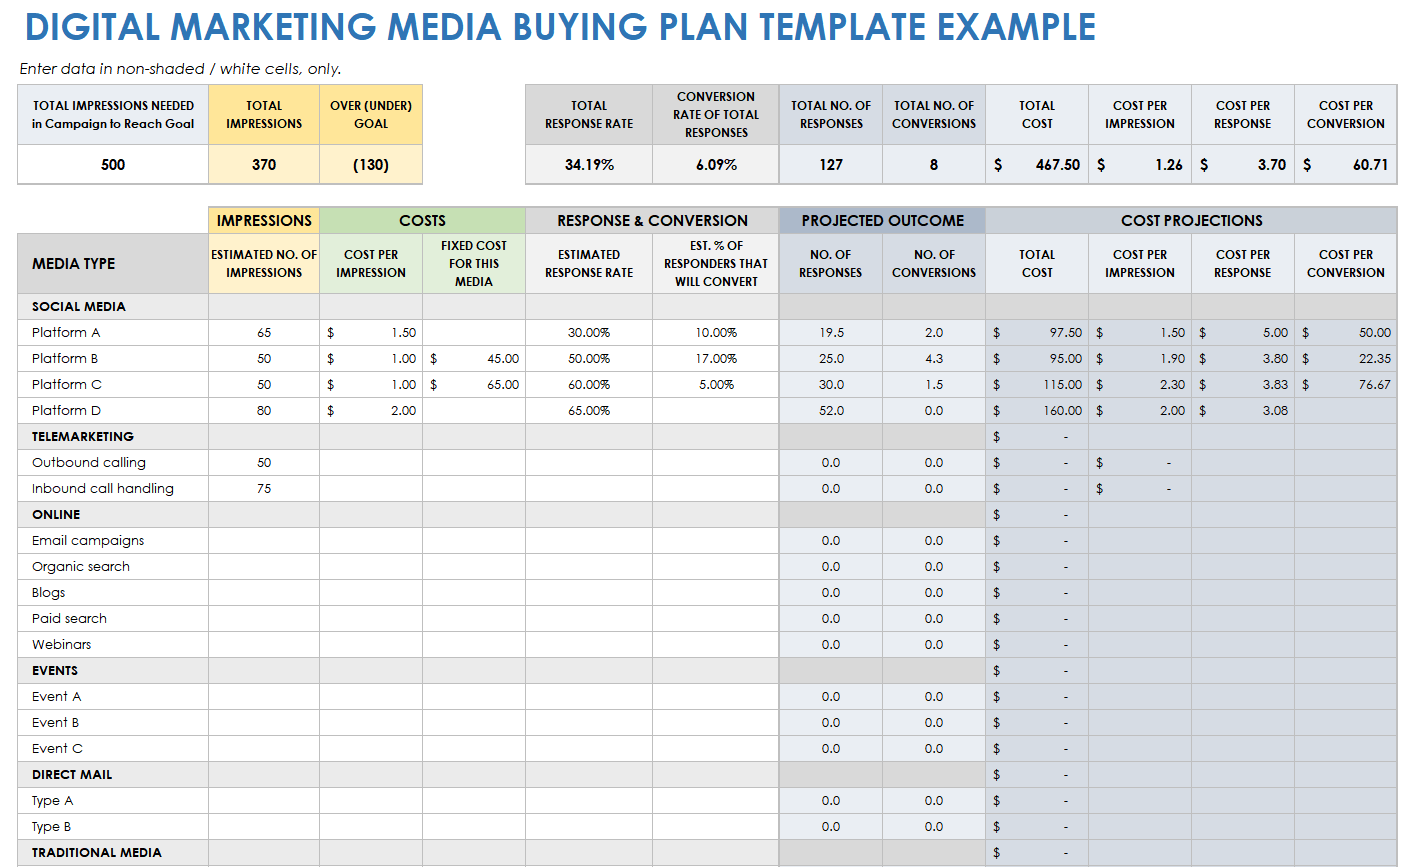 Digital Marketing Media Buying Plan Example Template